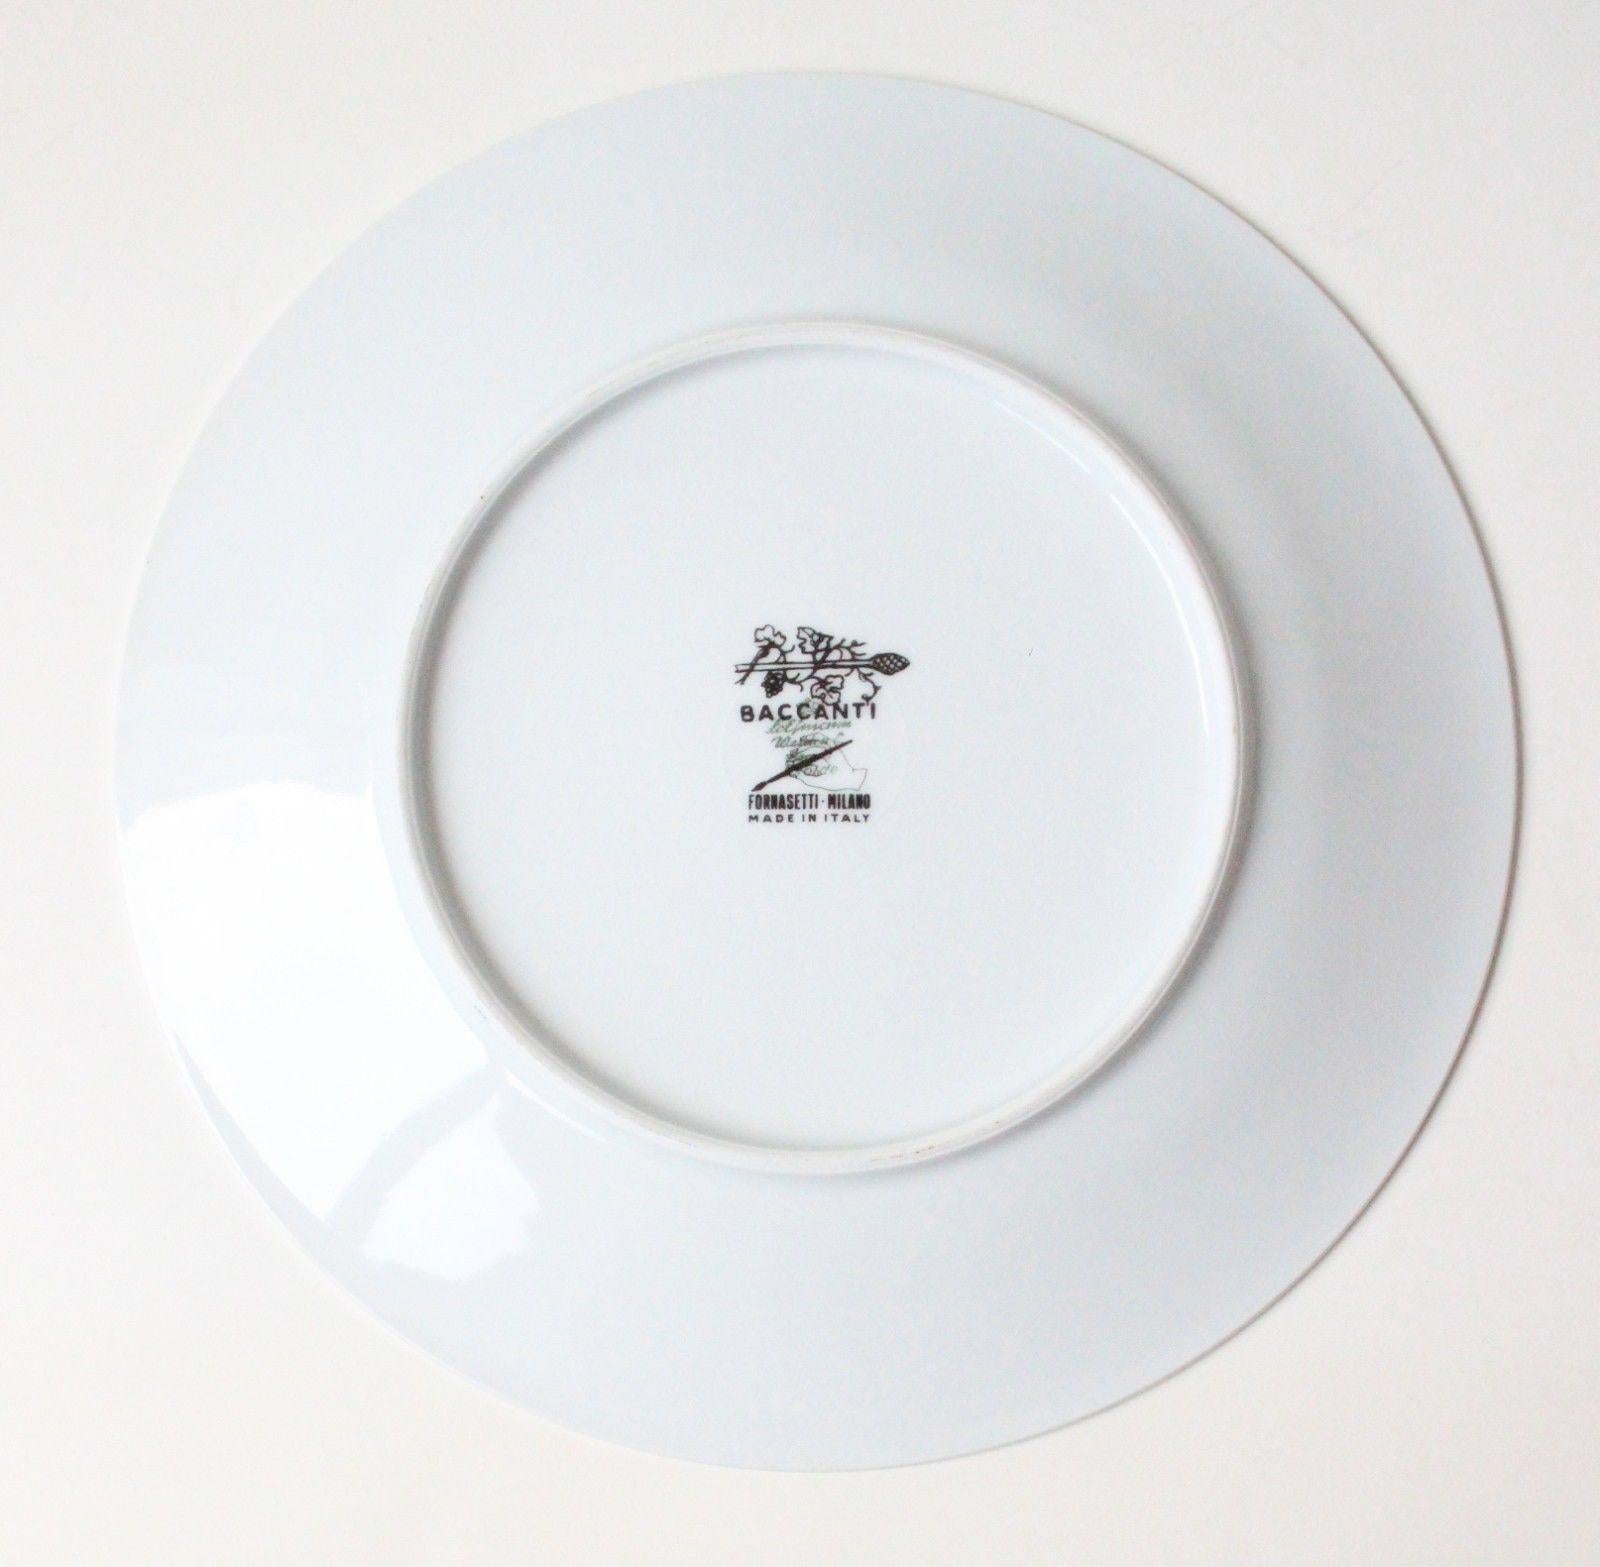 20th Century Vintage Piero Fornasetti Porcelain Large Baccanti Plate